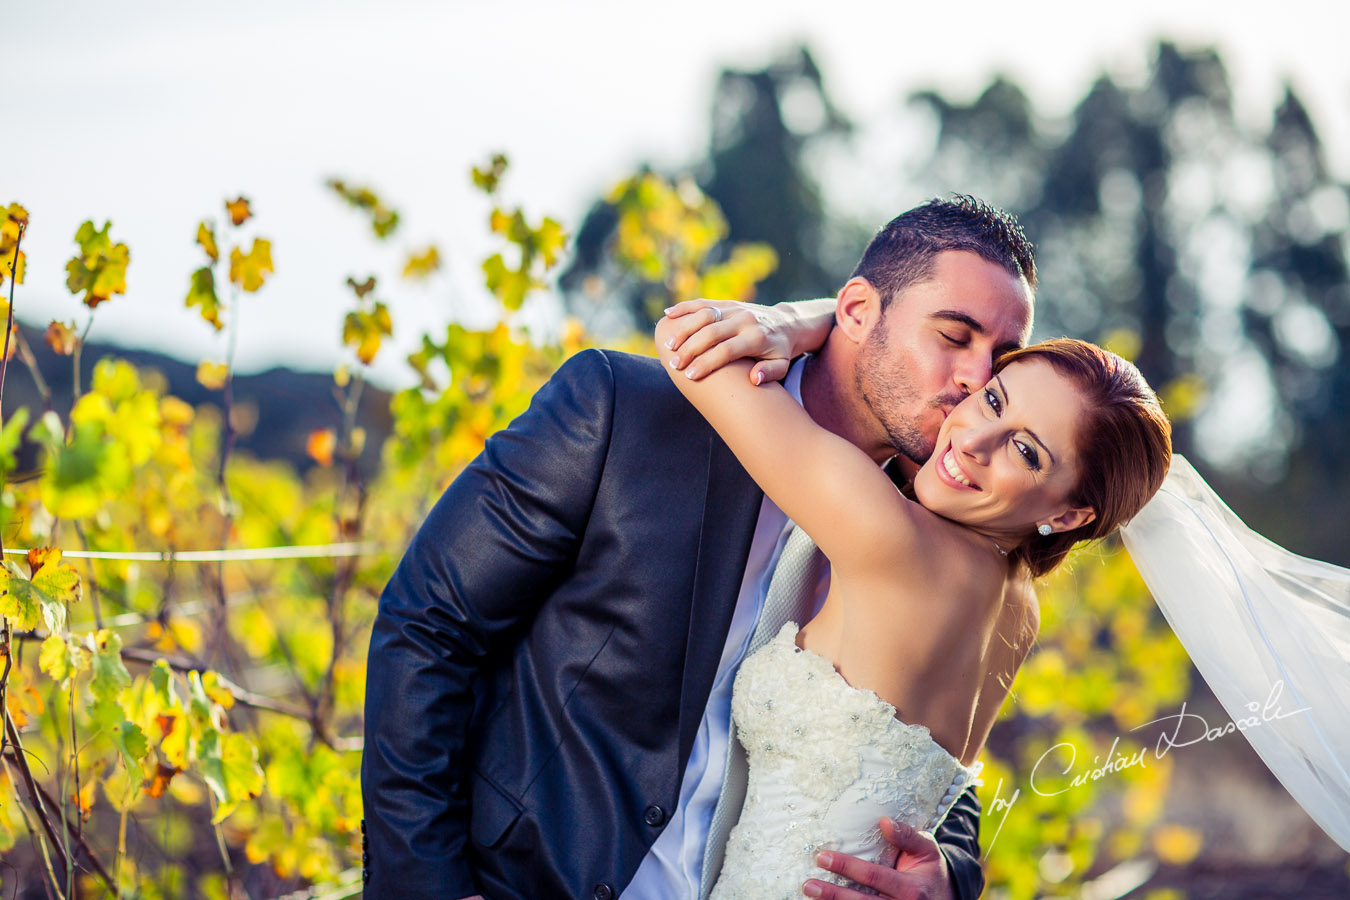 An Enchanted Wedding Photo Session - Marina & Xristos. Cyprus Photographer: Cristian Dascalu